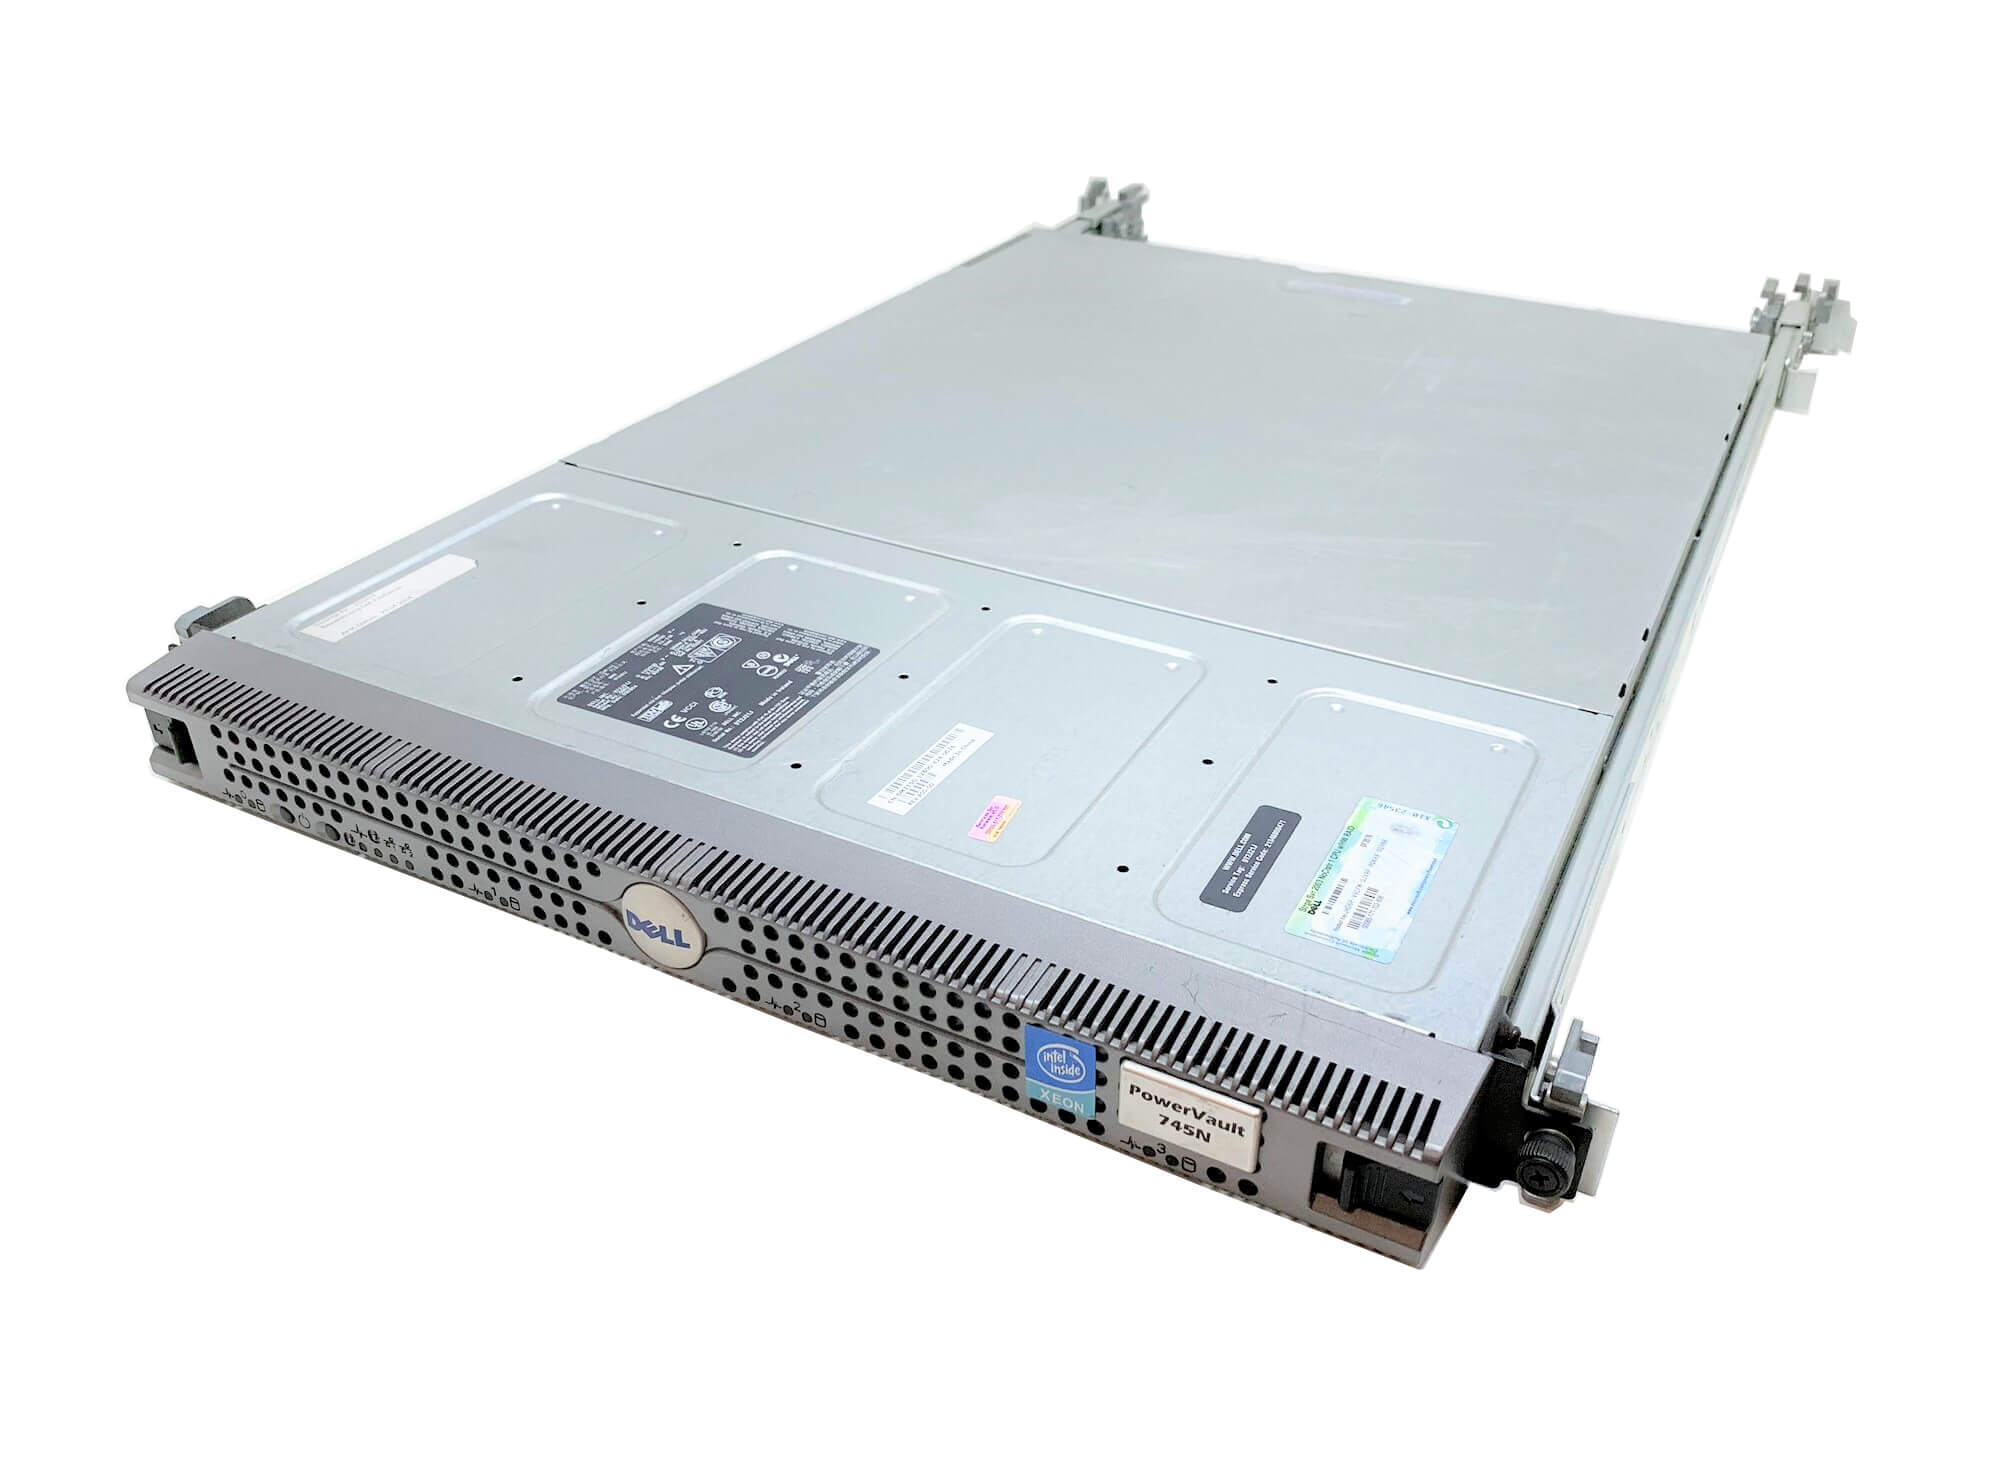 DELL POWERVAULT 745N PENTIUM 4 2,8 / 1 GB DDR1 ECC / WINDOWS 2003 STORAGE RAID COA / 2U